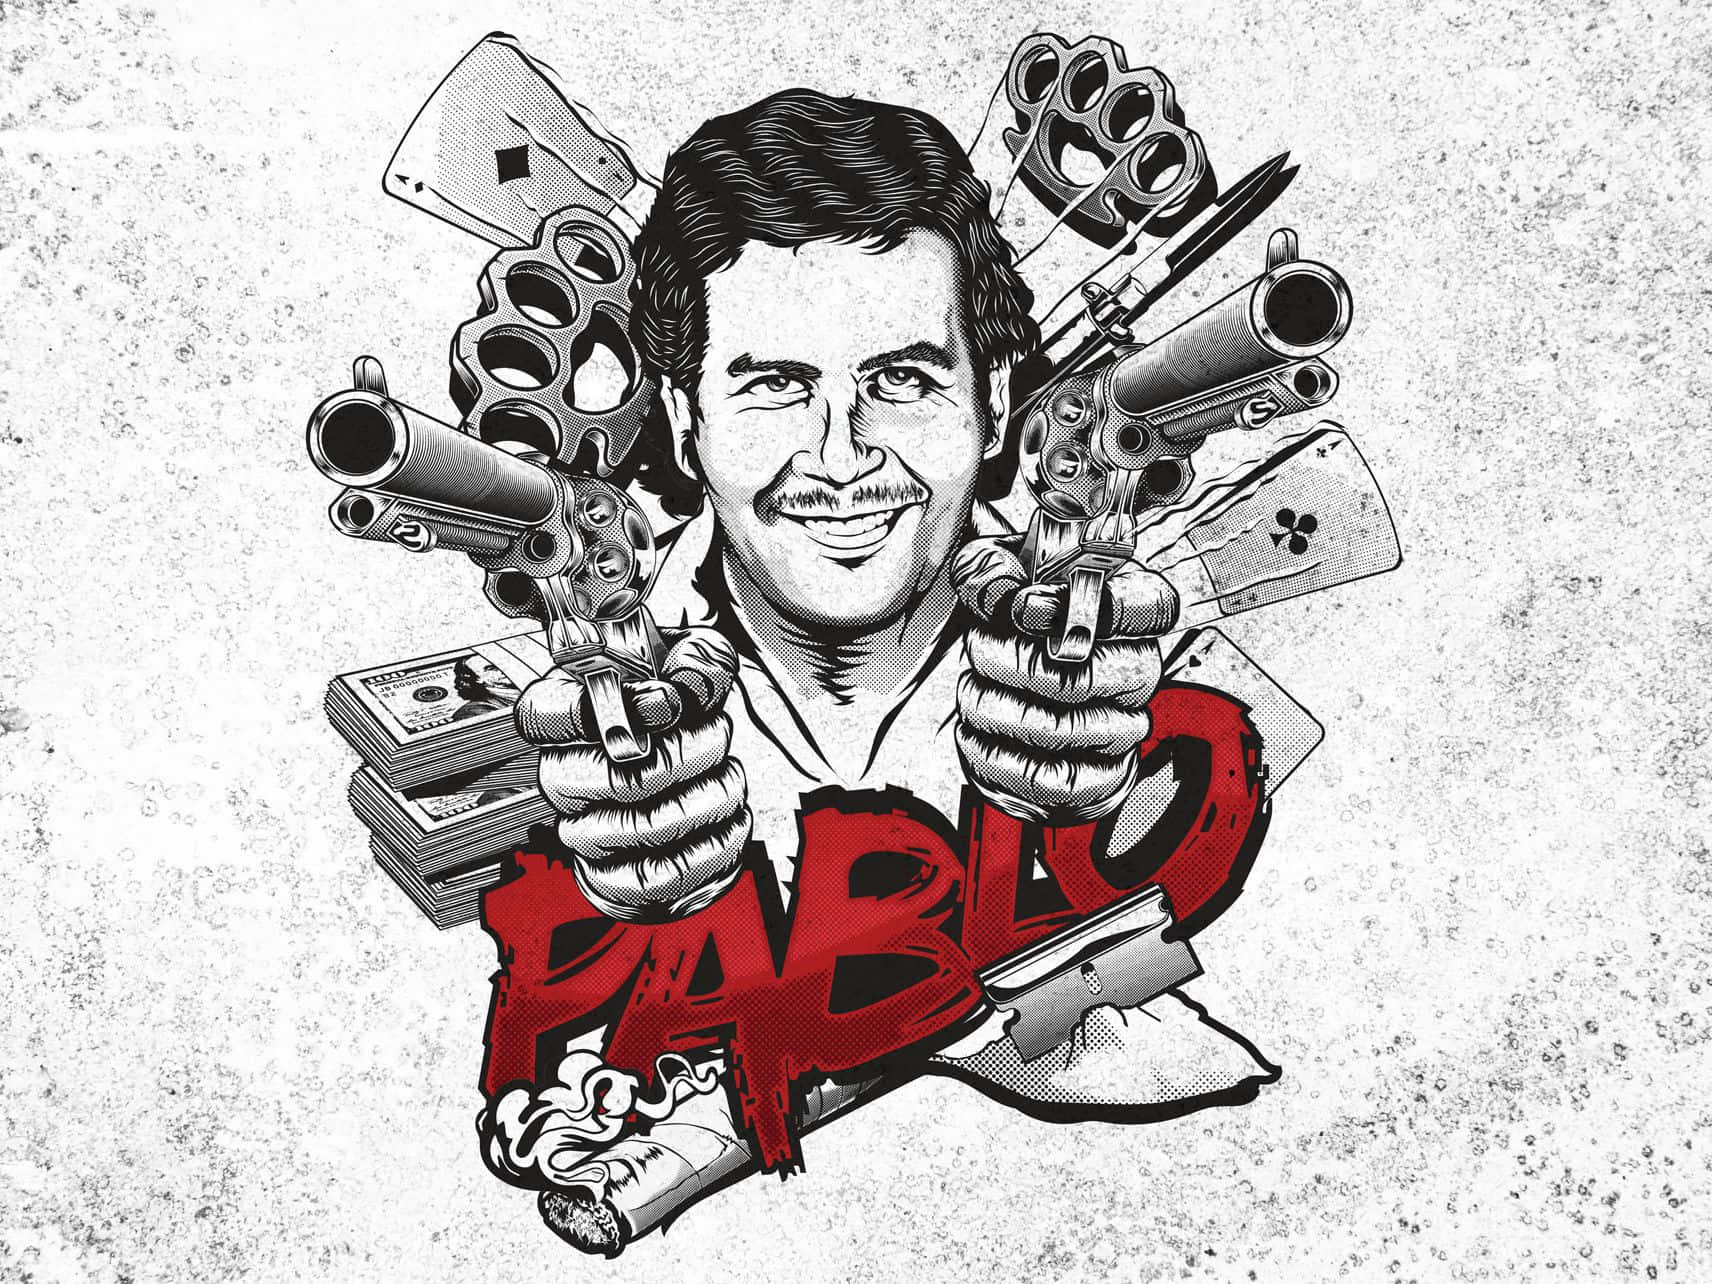 Pablo - A Man Holding A Gun